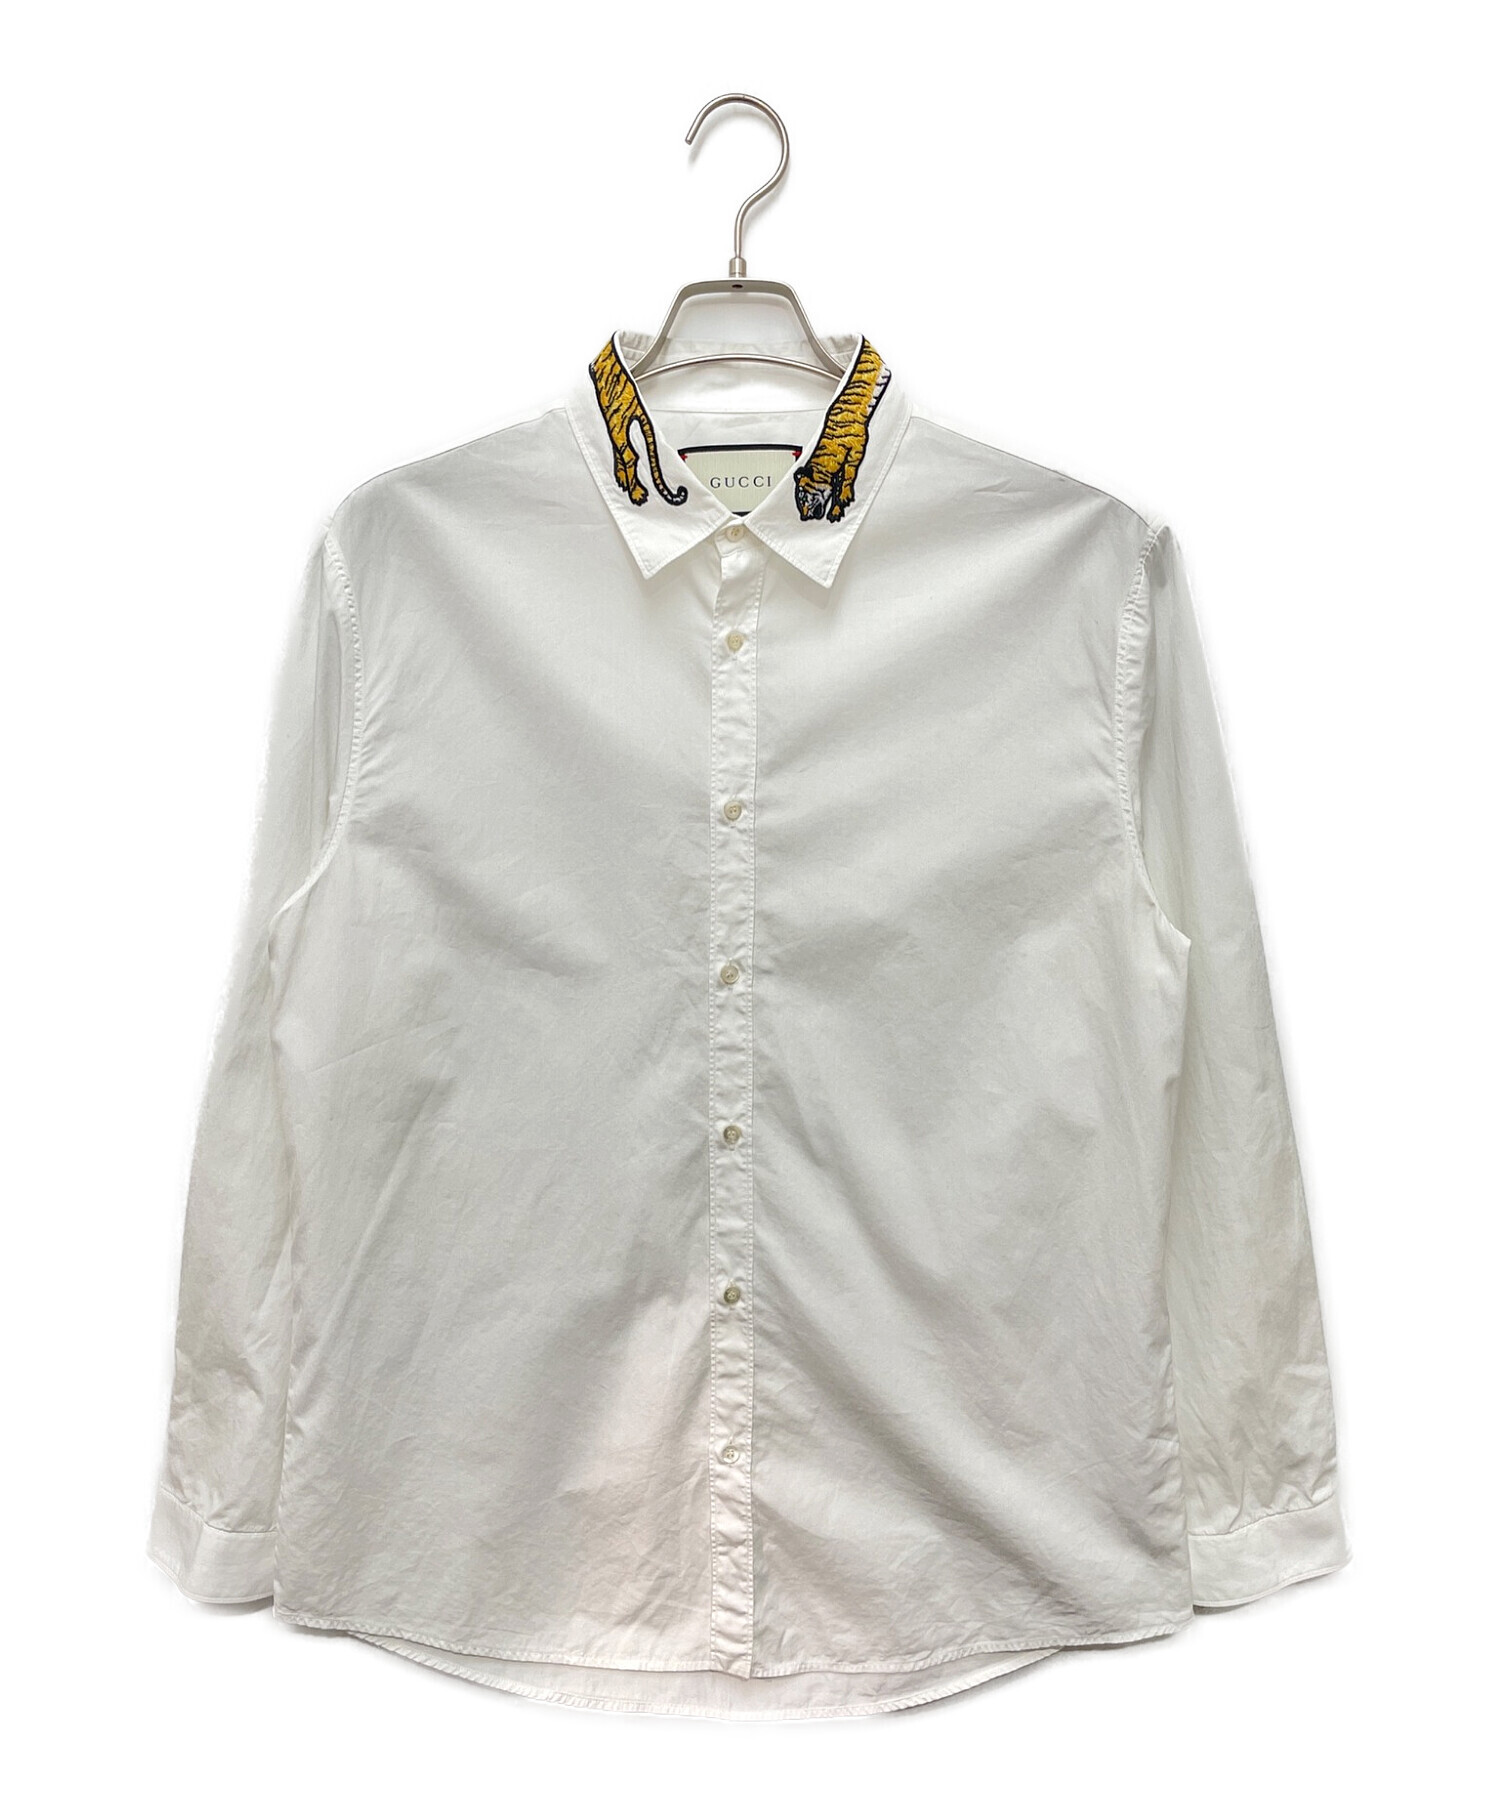 GUCCI (グッチ) DUKEタイガー刺繍シャツ ホワイト サイズ:42